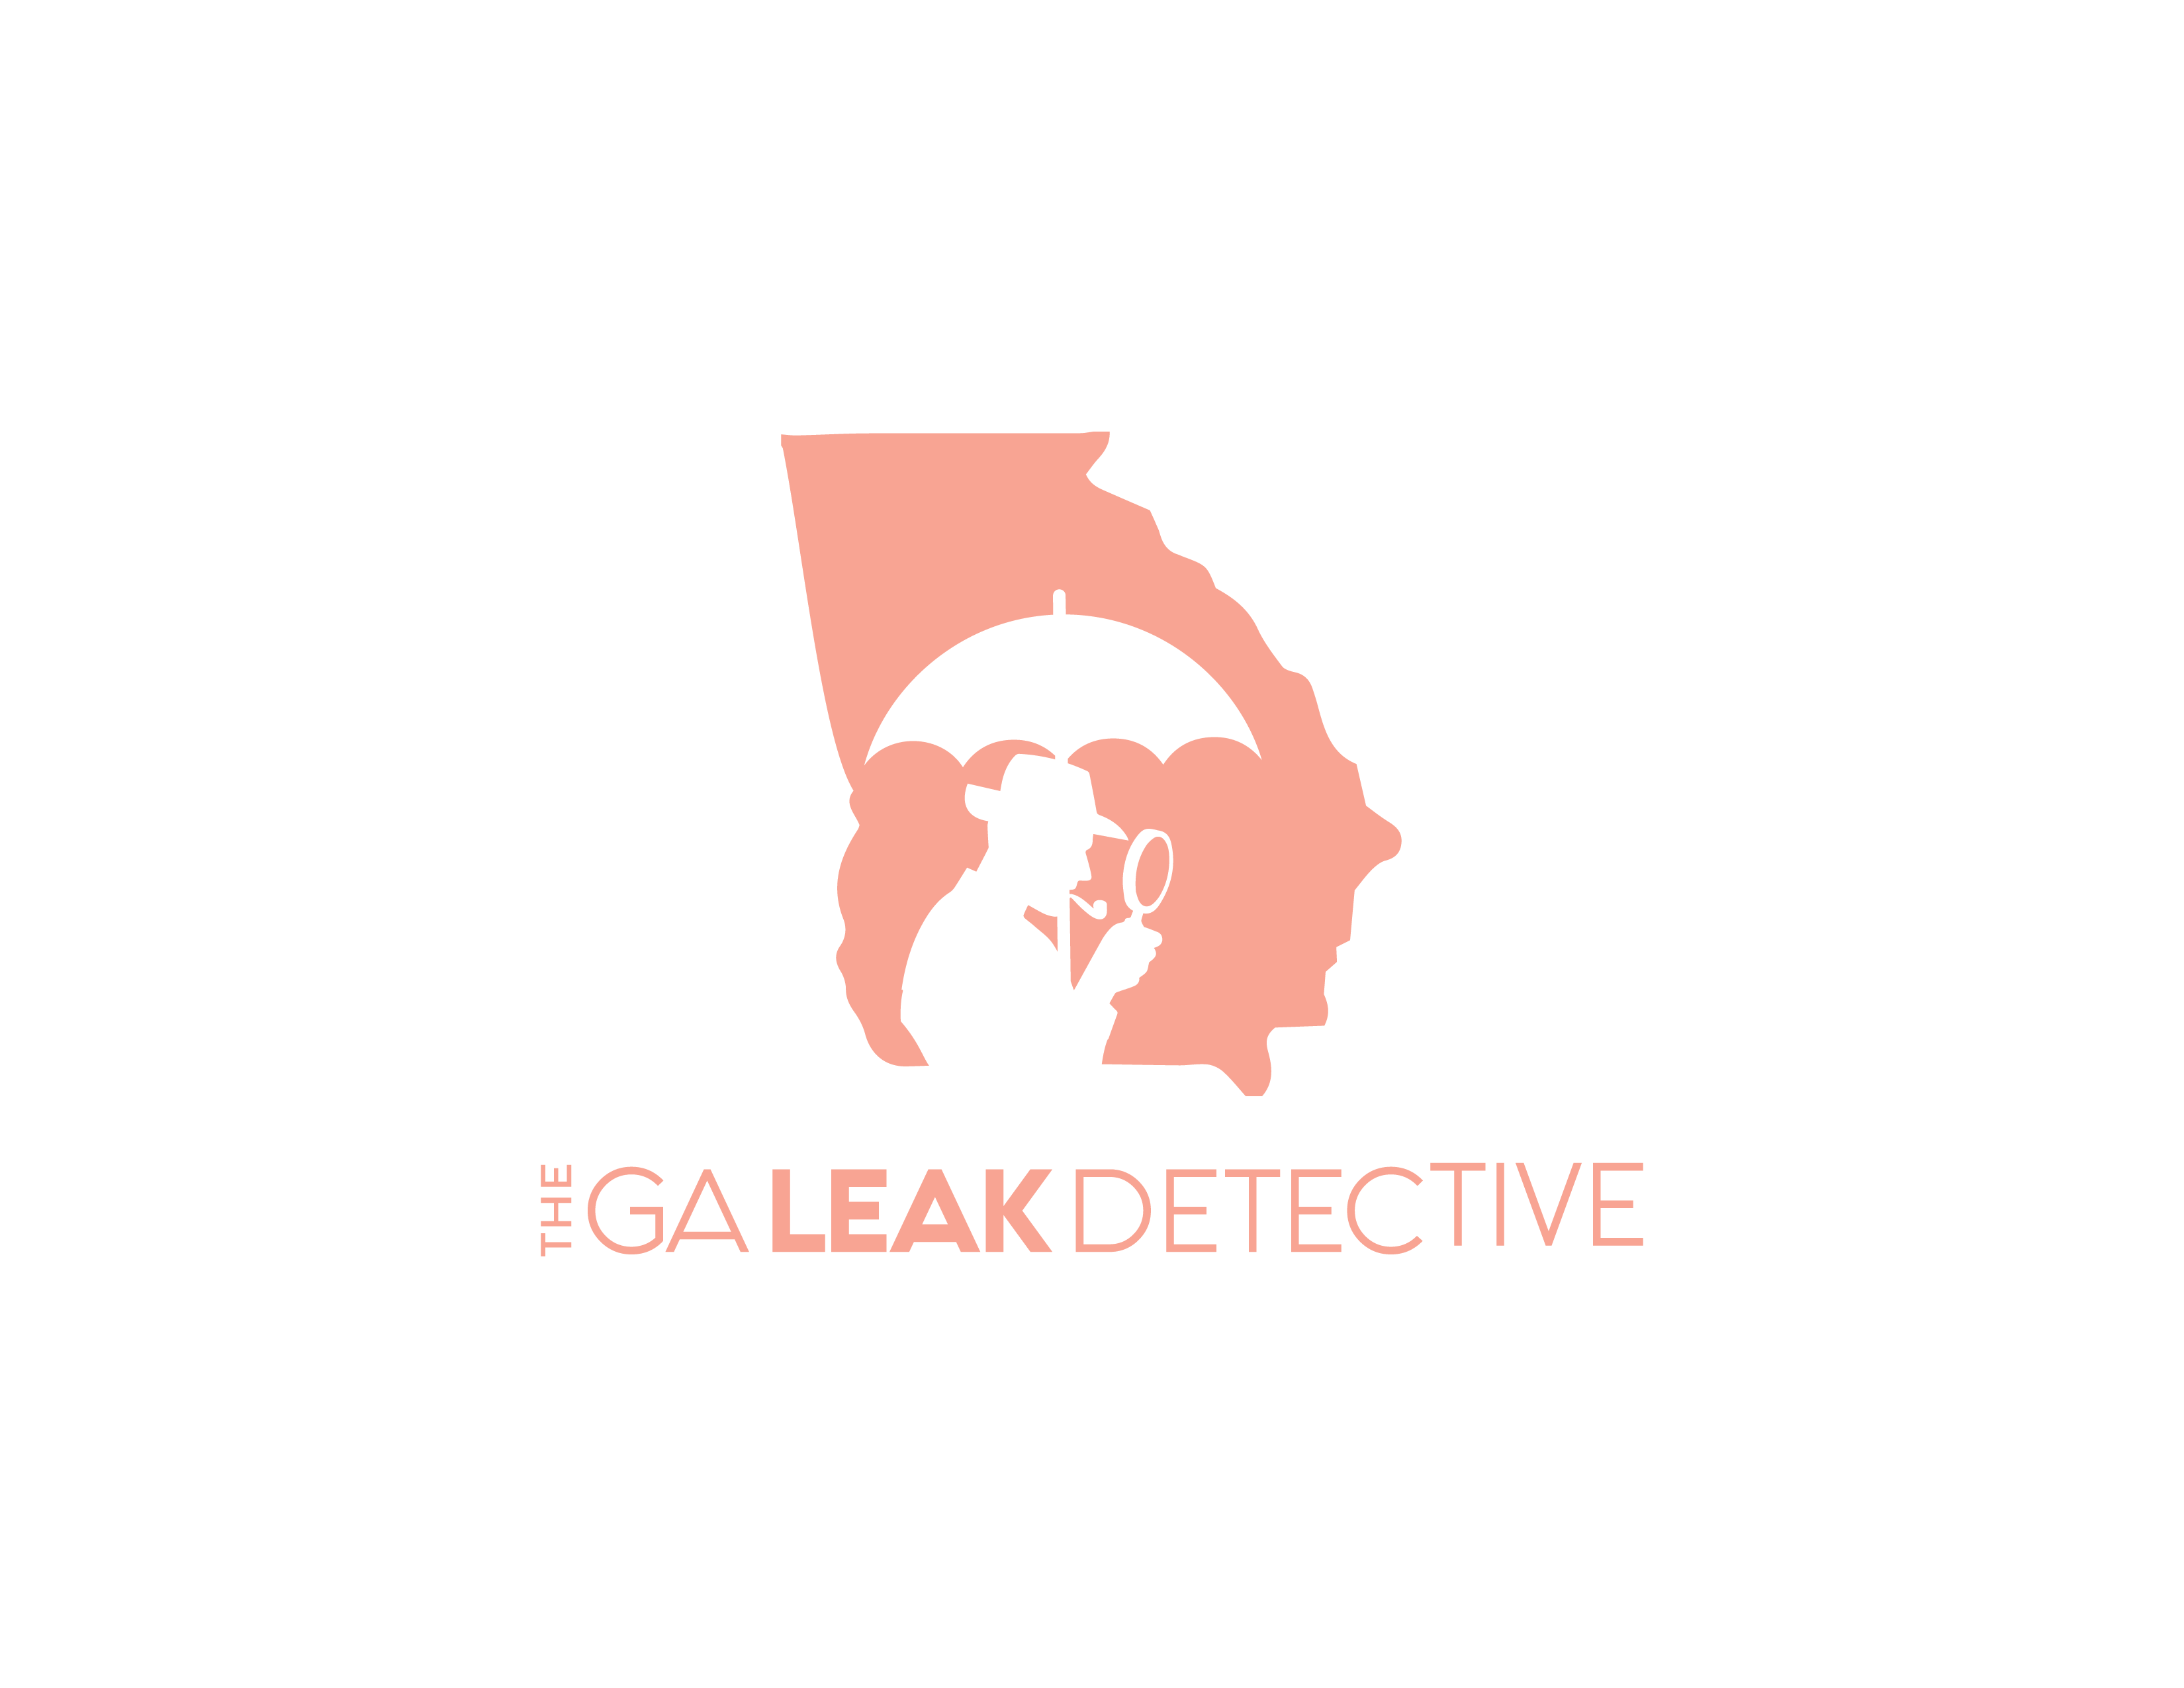 The GA Leak Detective Logo